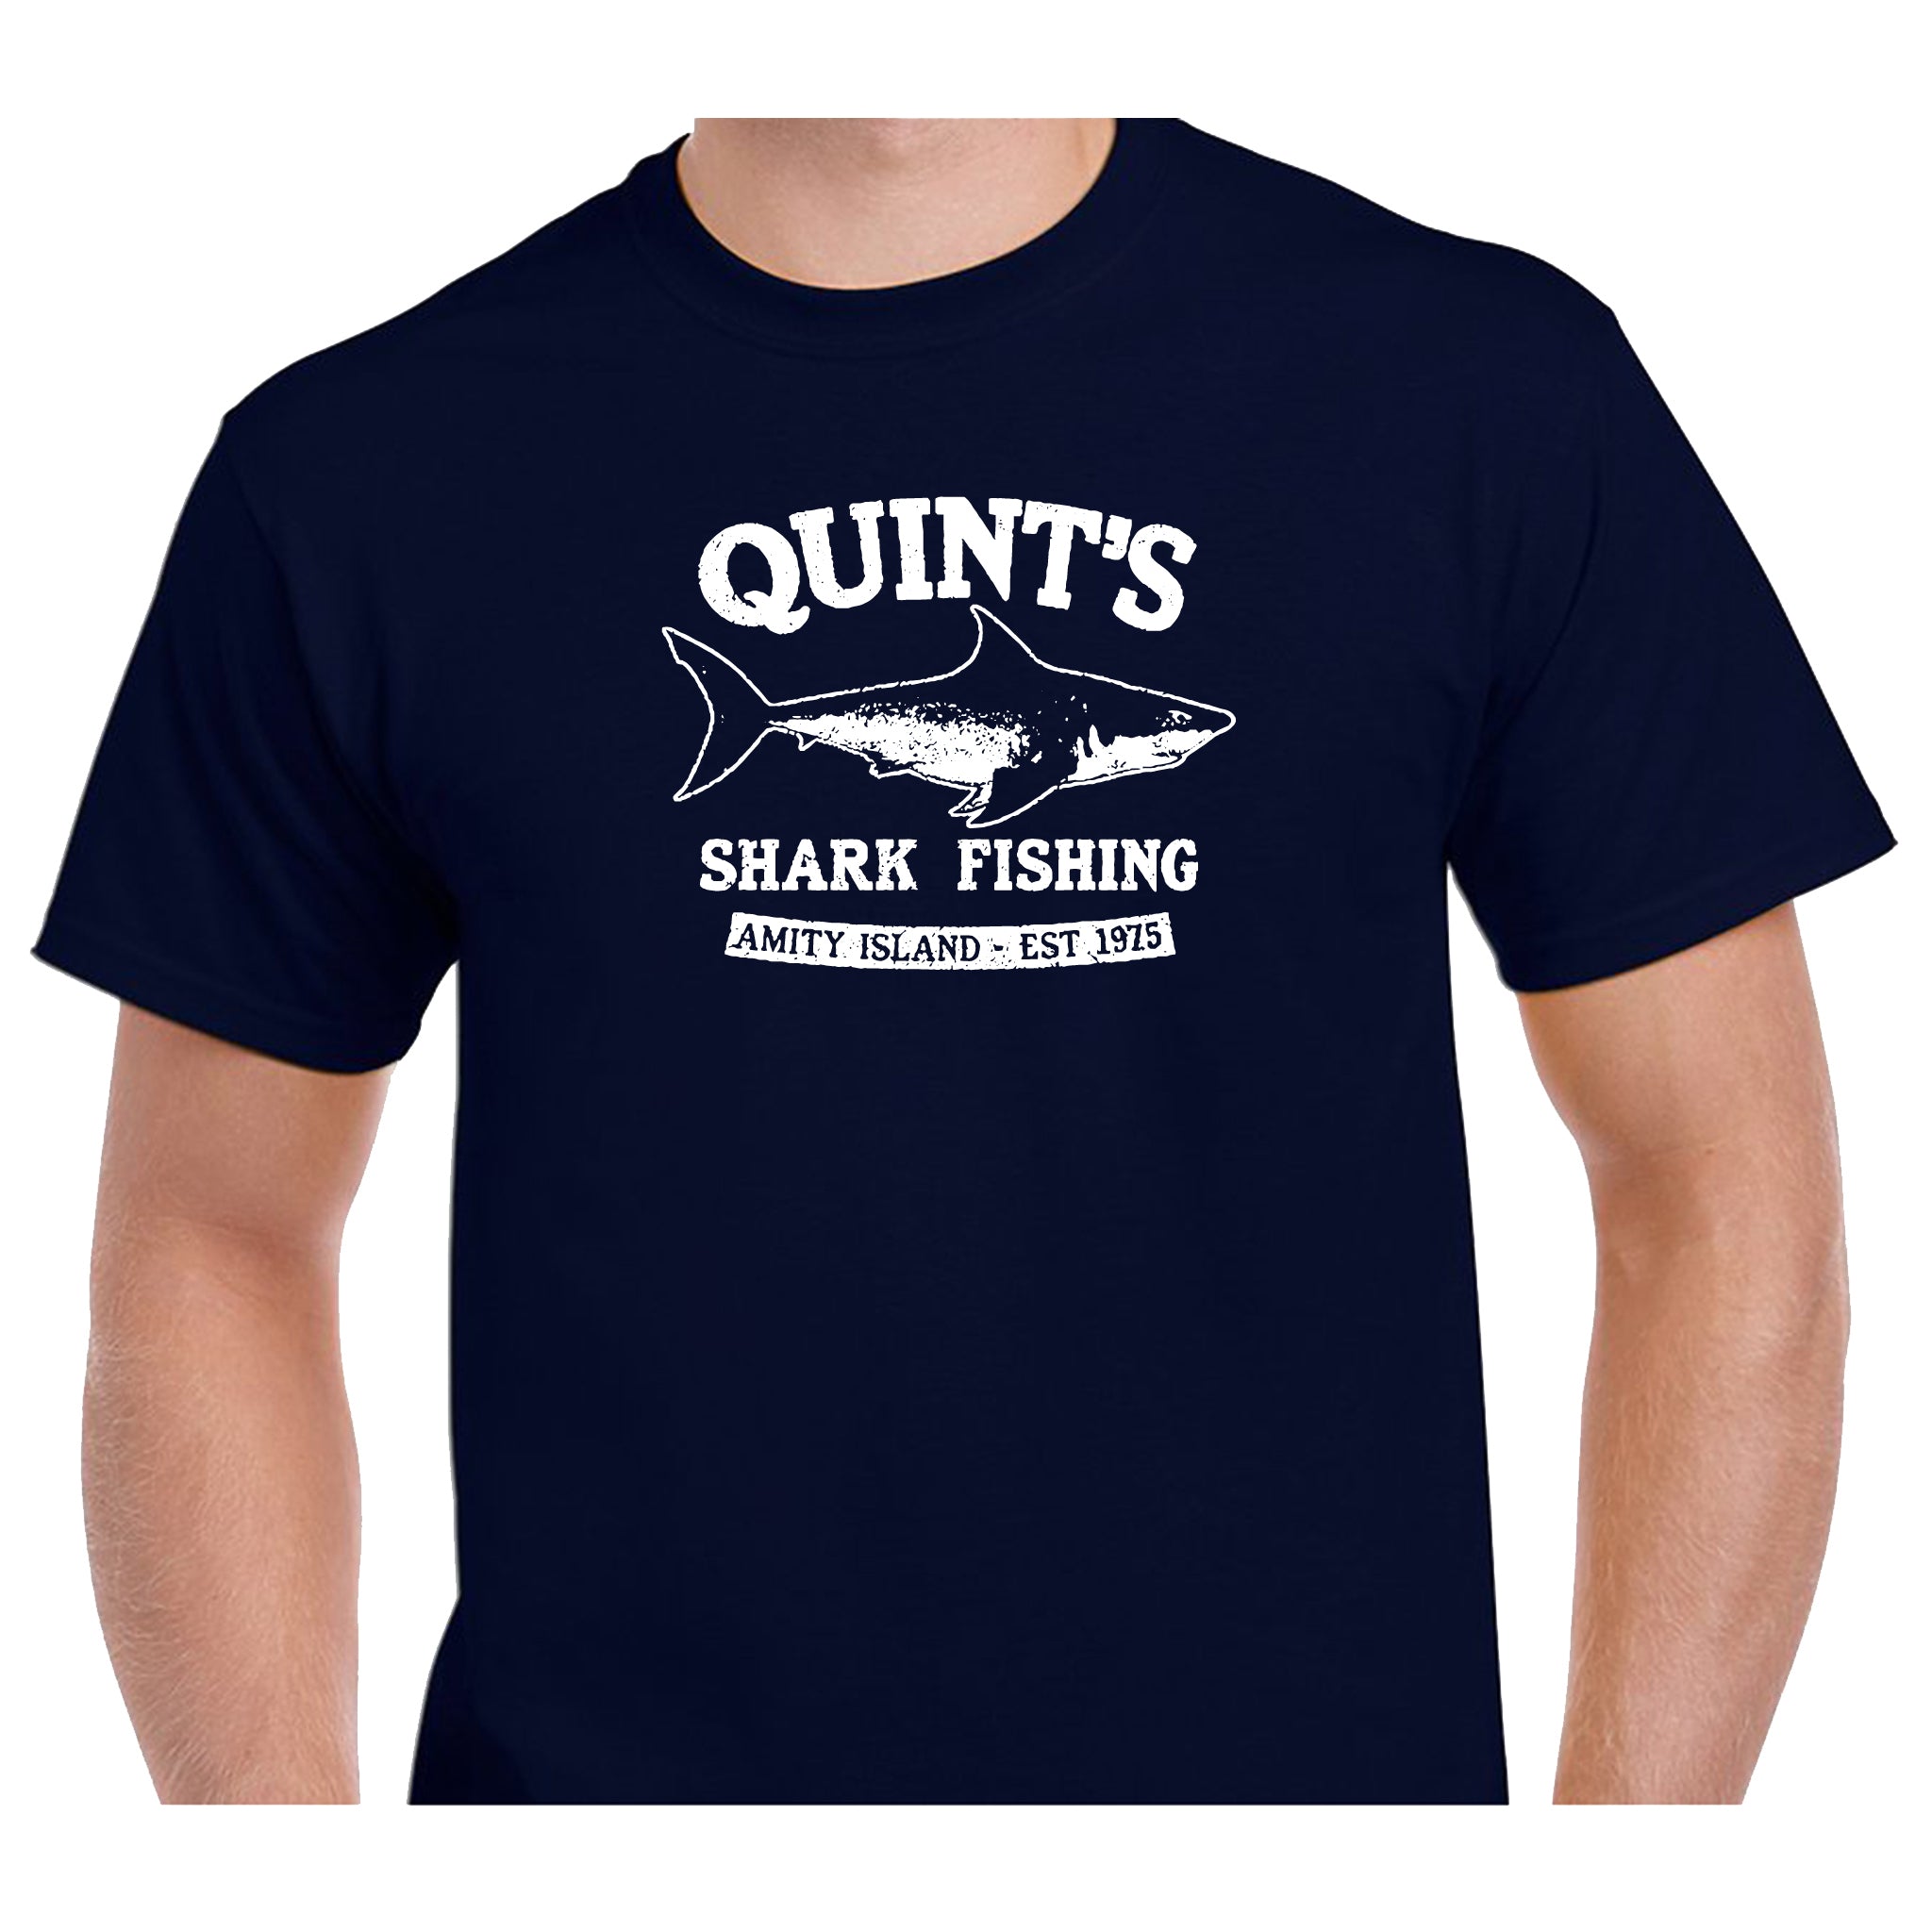 Funny TShirts For $12.95, Quint's Shark Fishing Tee